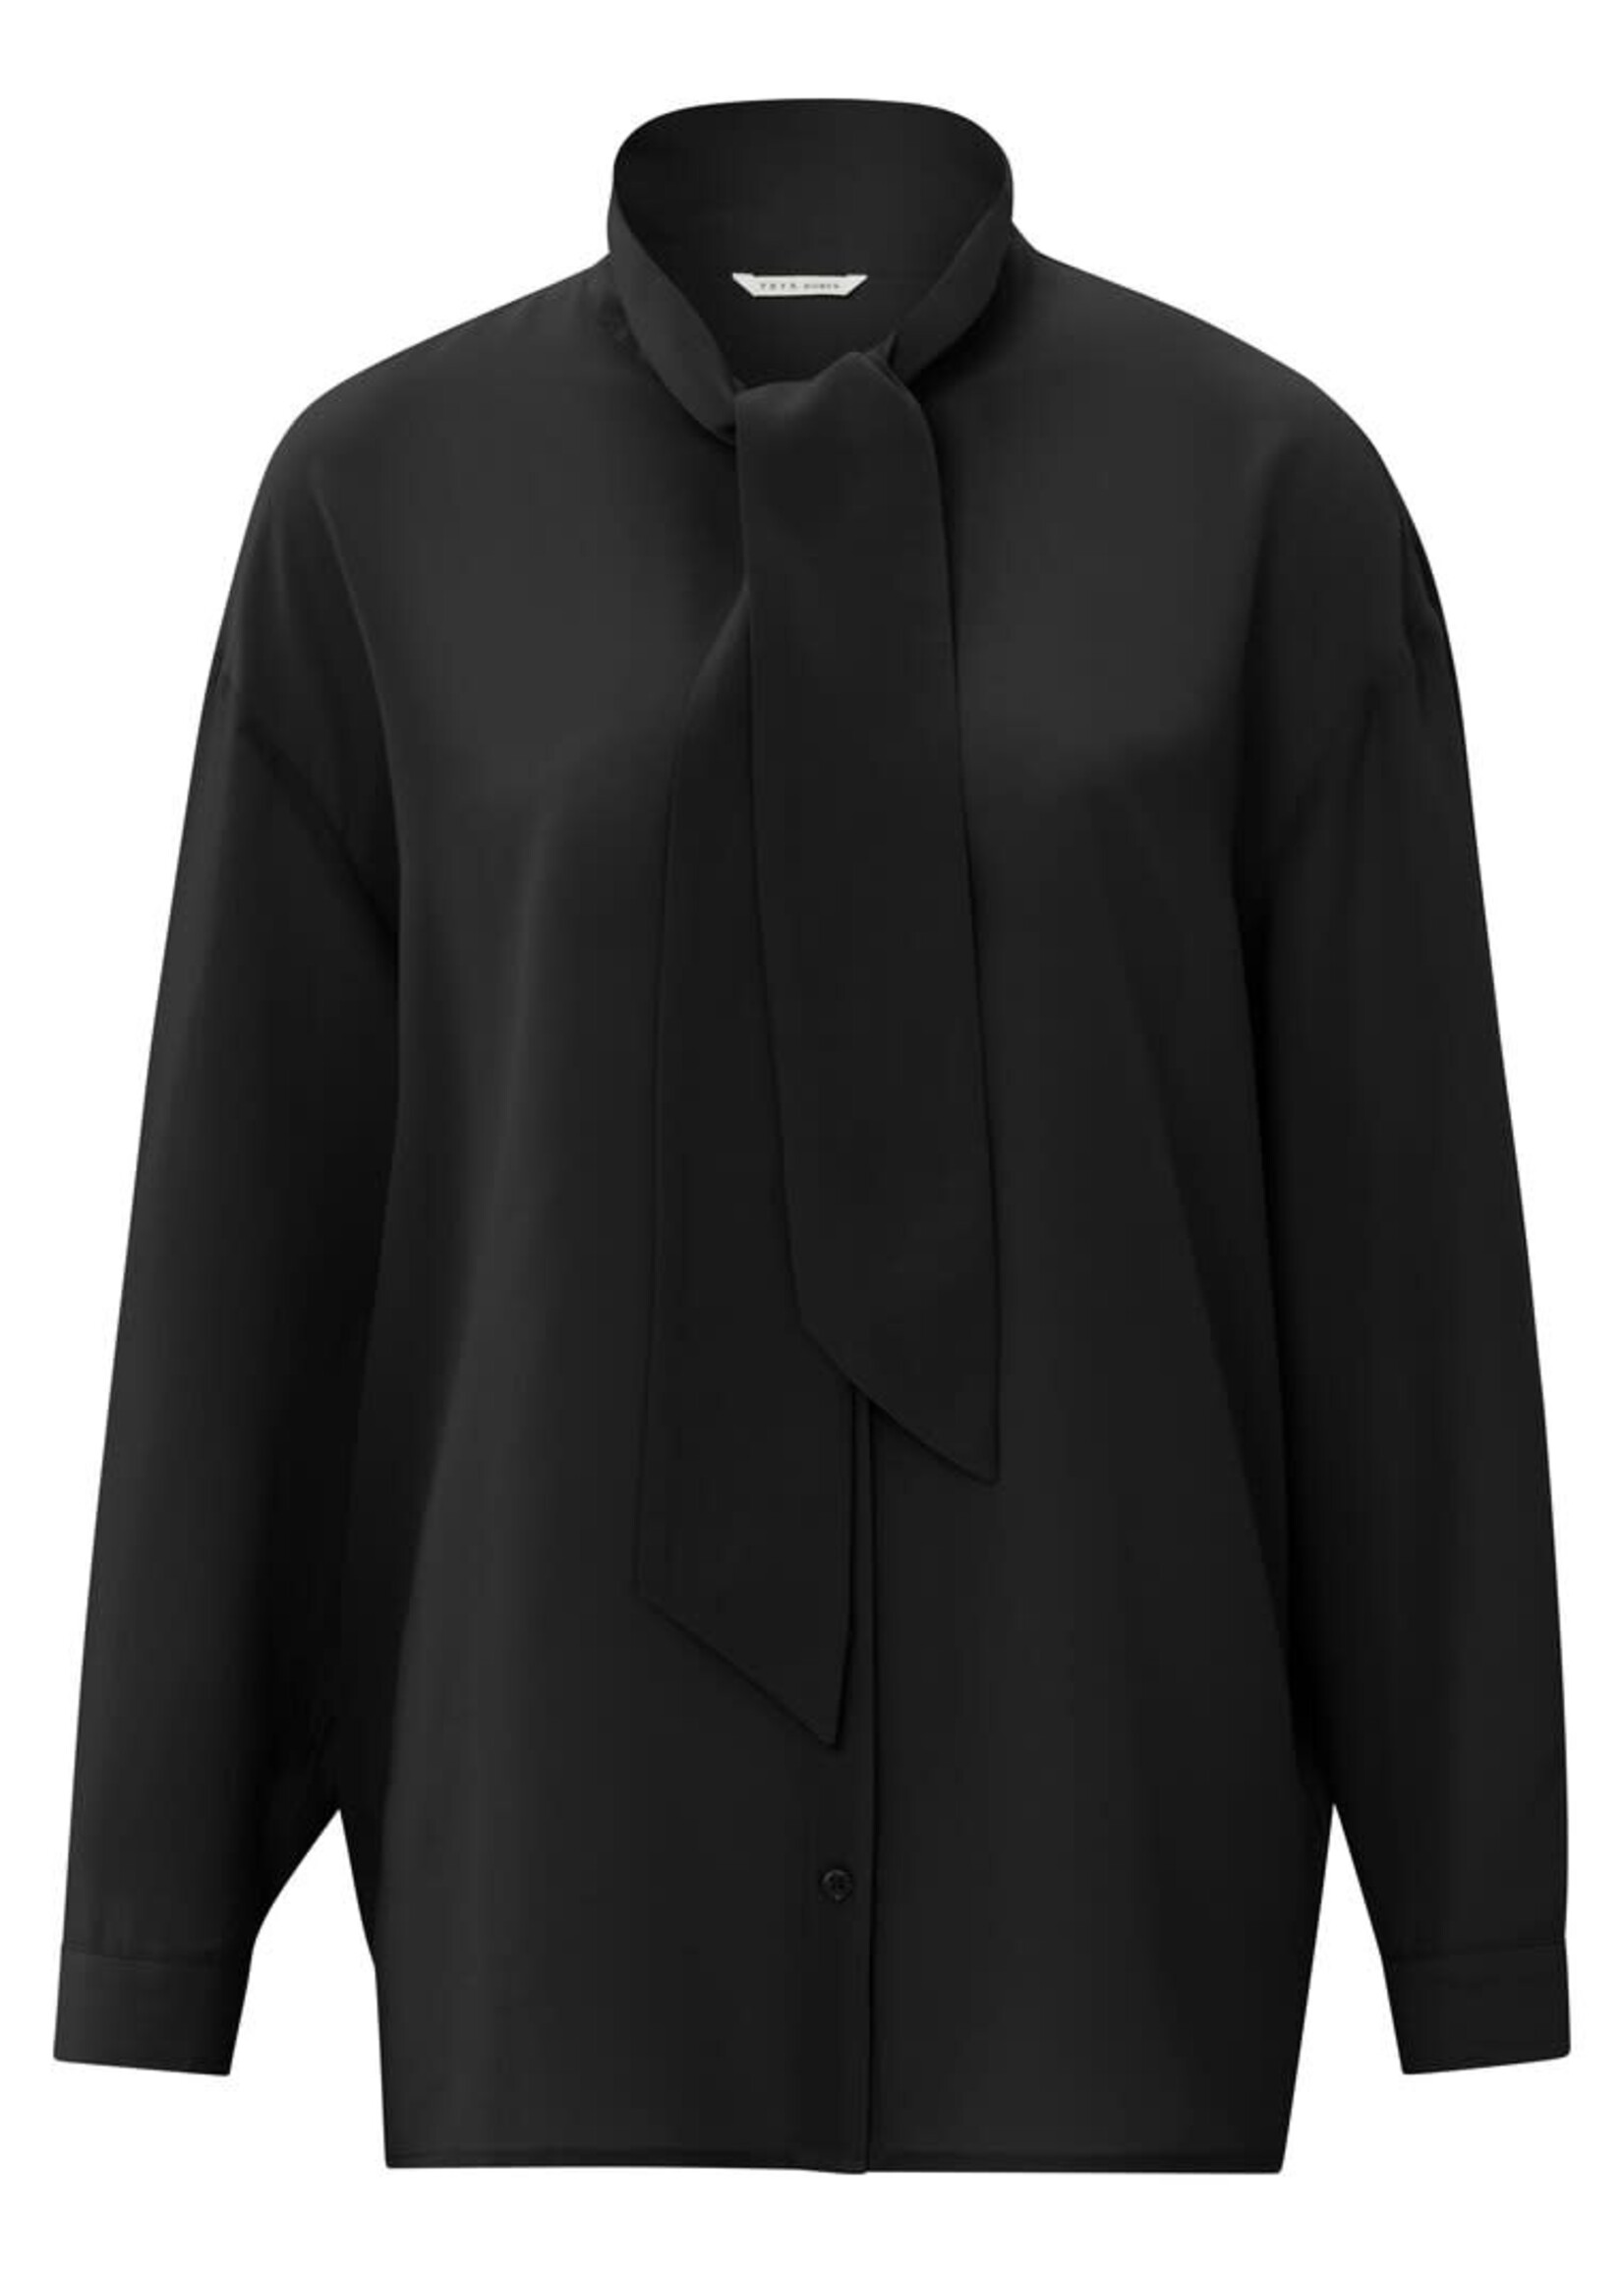 Yaya Yaya, Supple blouse, long sleeves, buttons, bow tie, Black, Size: